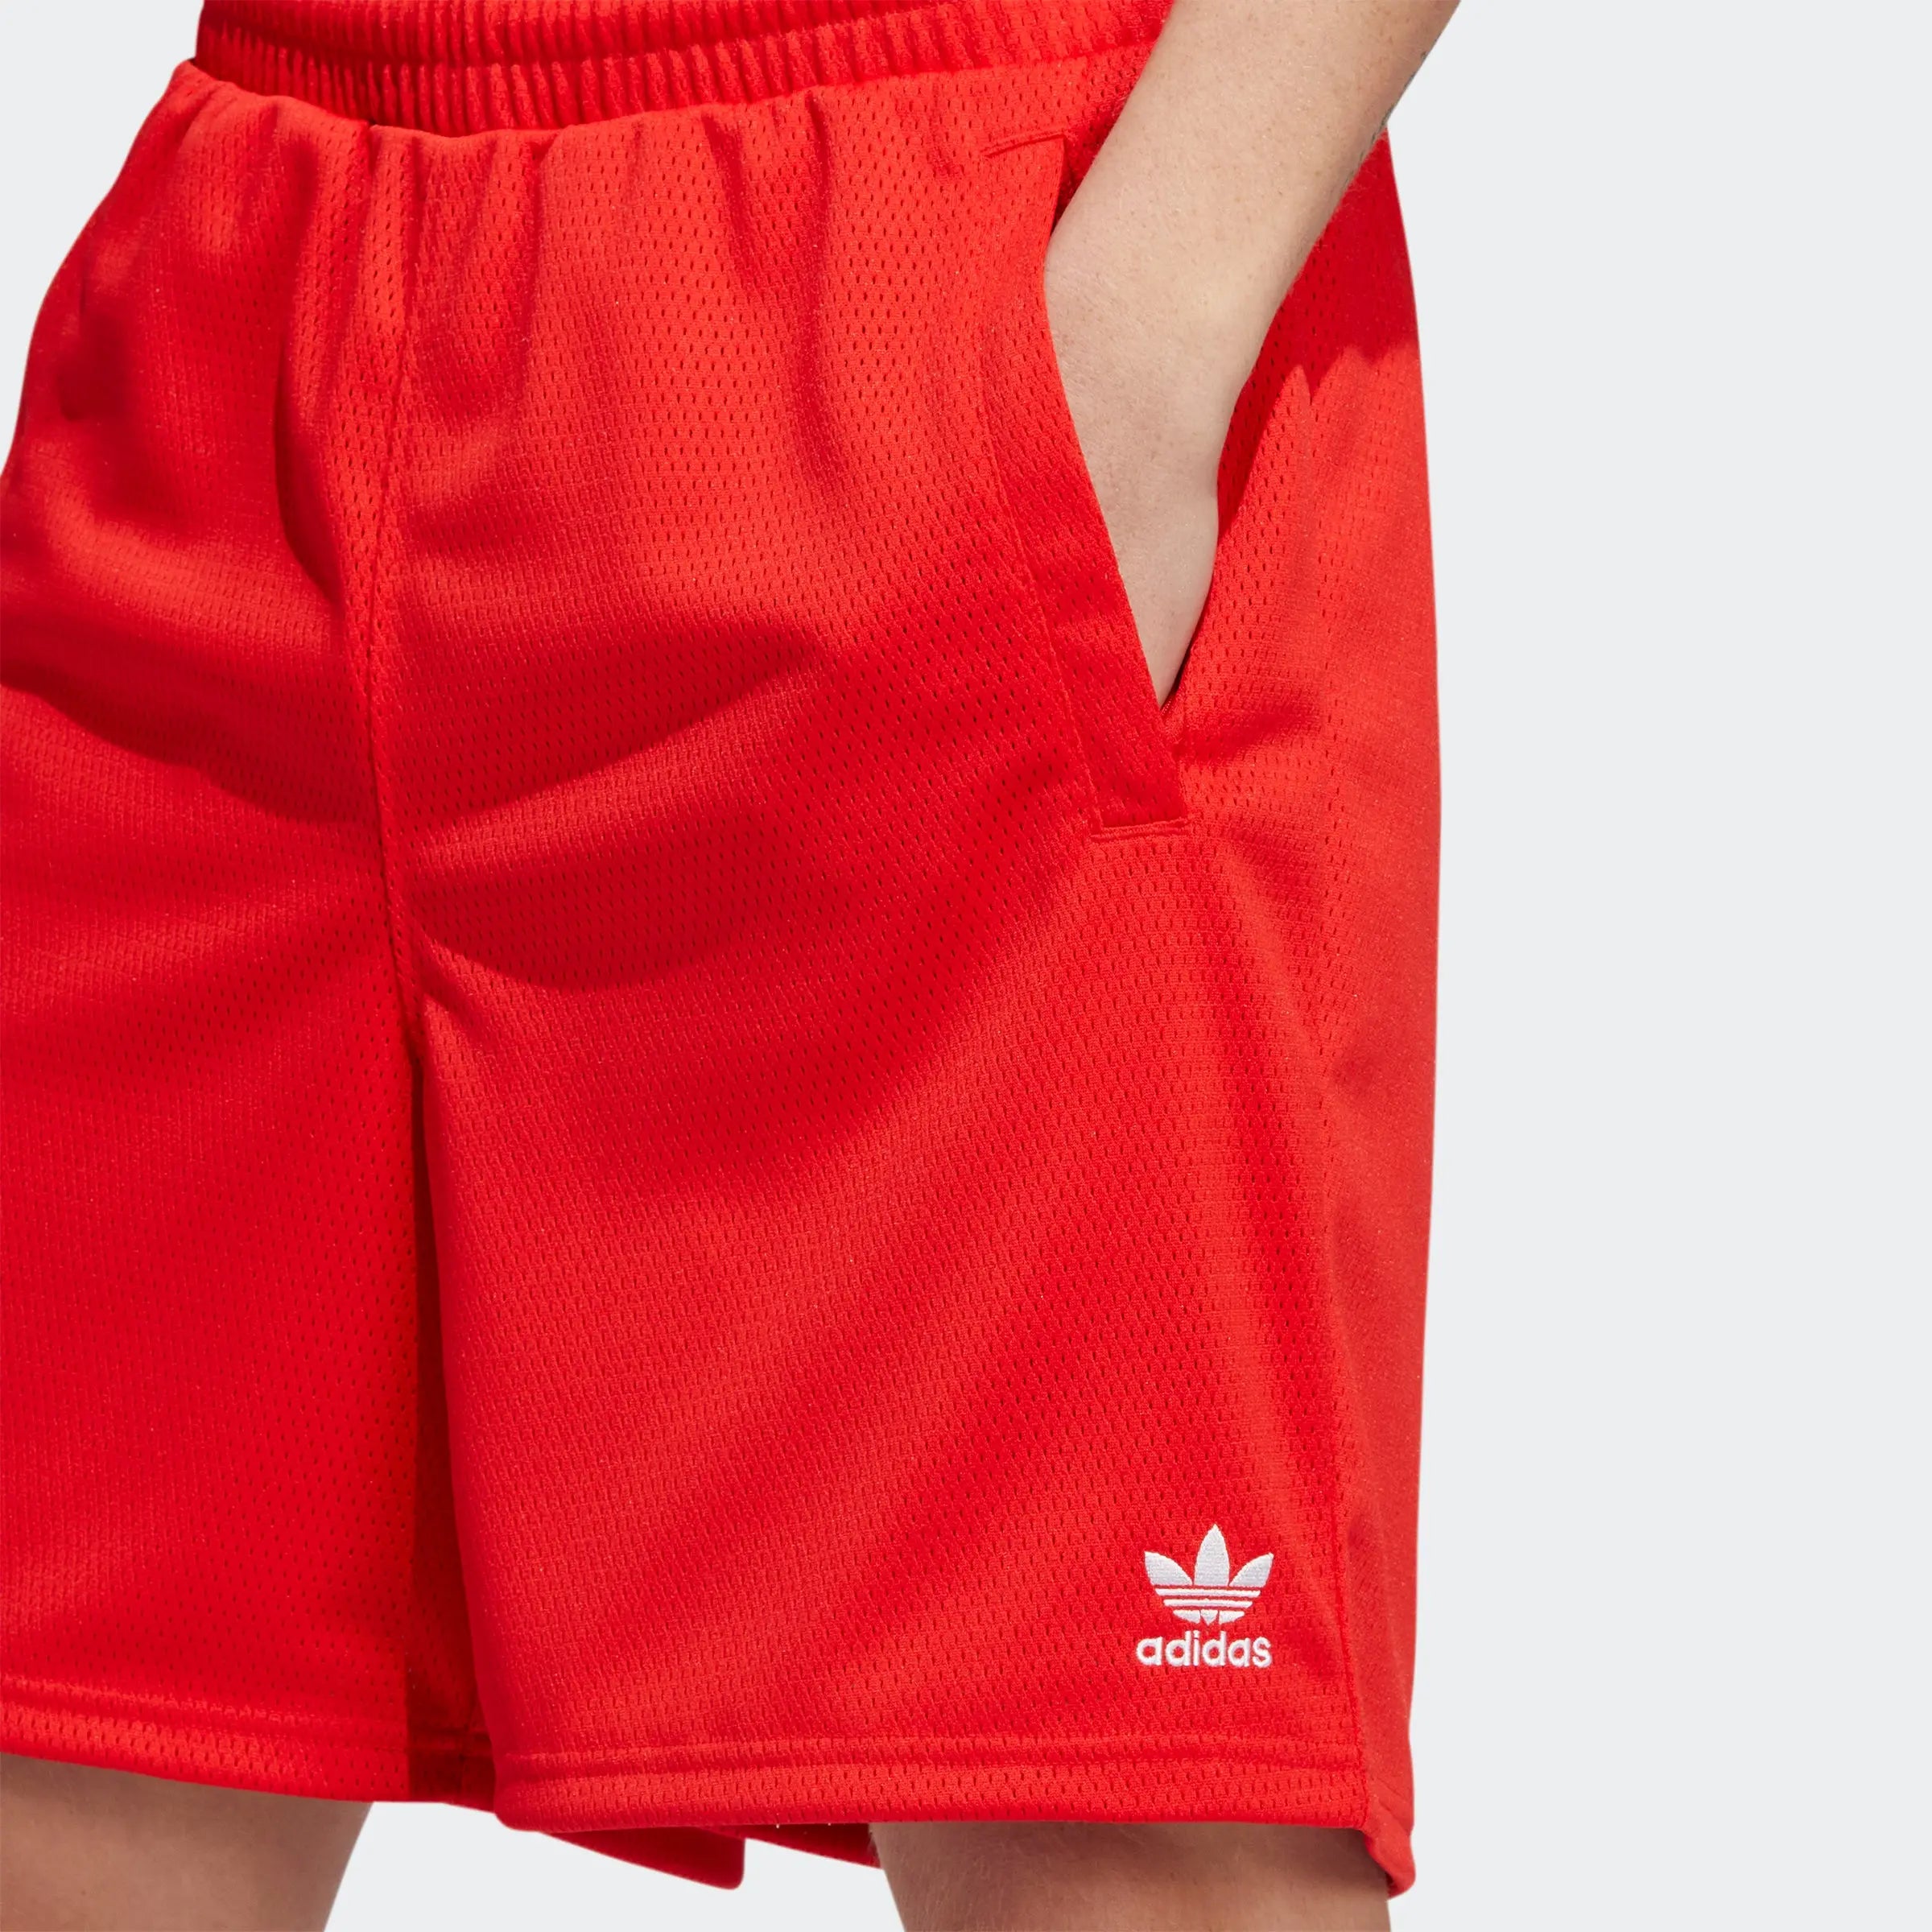 Adidas Essential Mesh Short Red - Puffer Reds